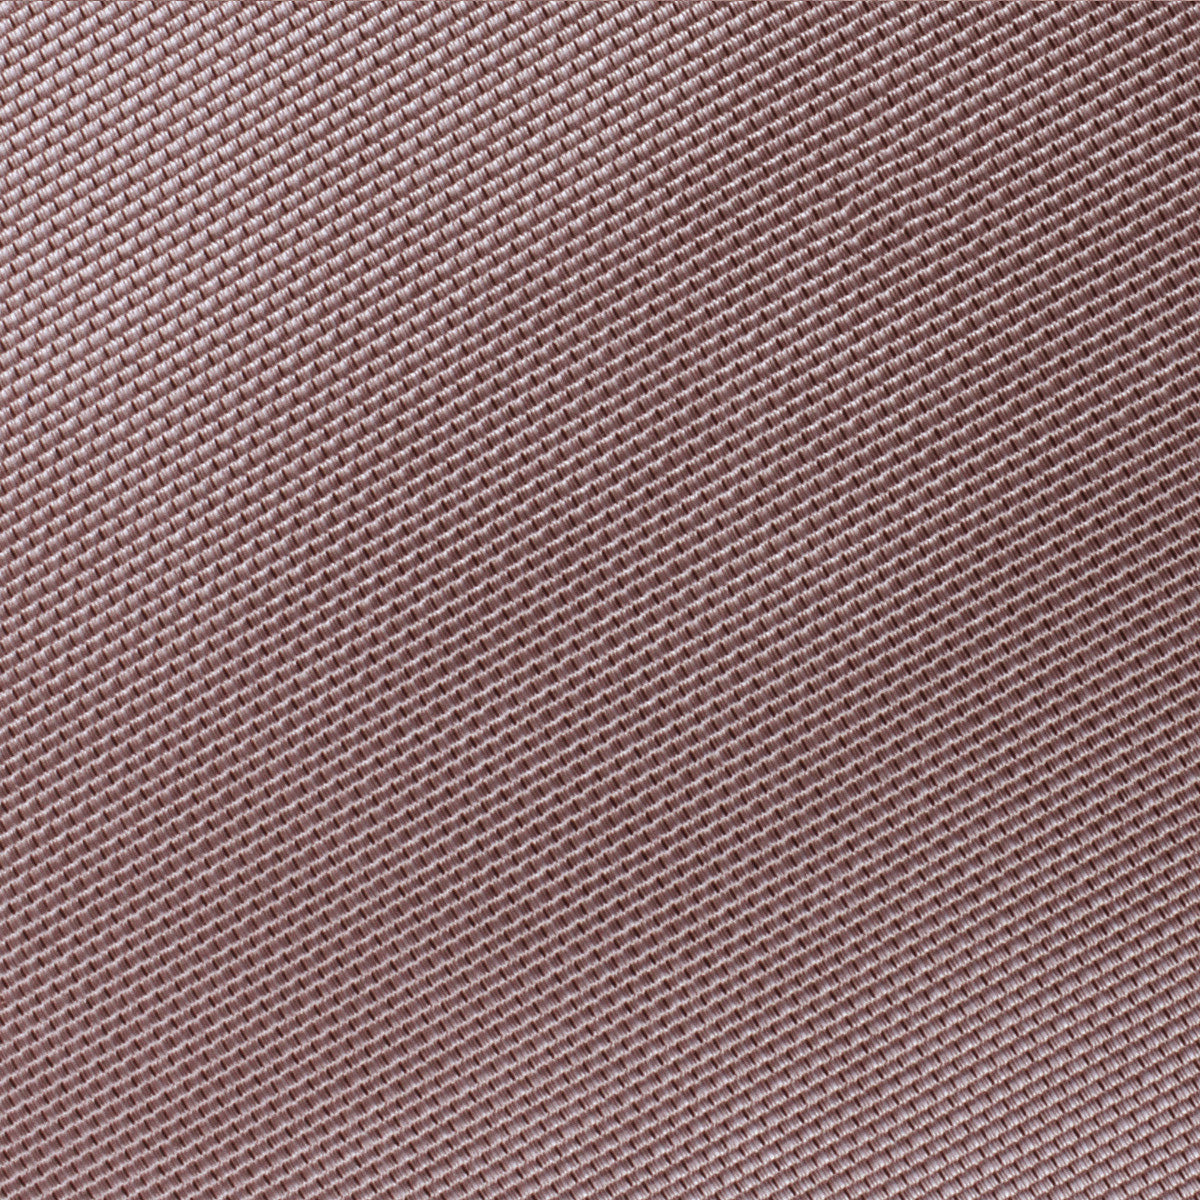 Dusty Mauve Quartz Weave Skinny Tie Fabric